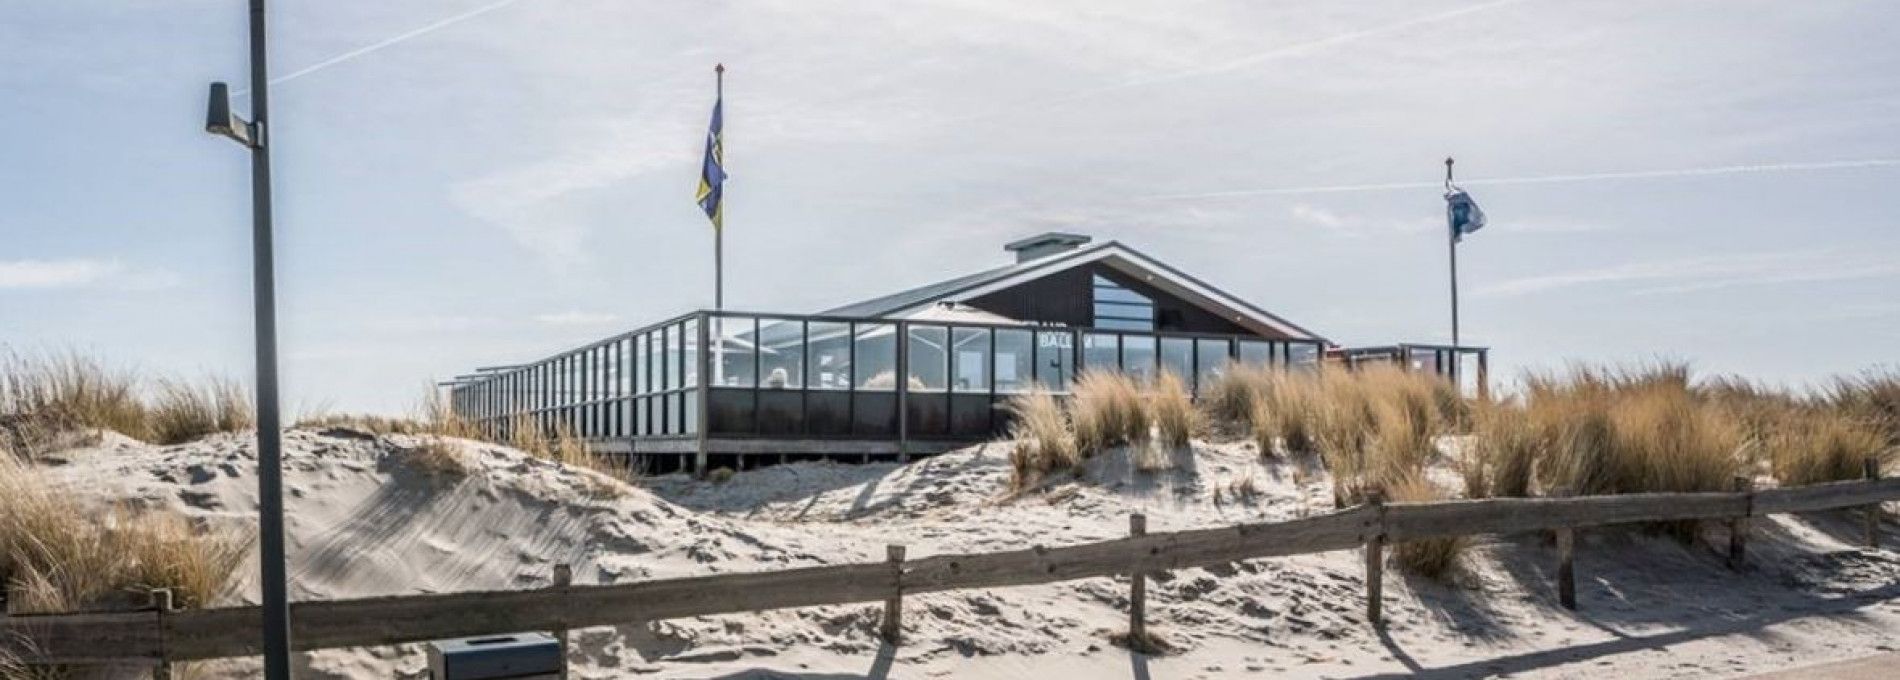 Beach pavilion Ballum - Tourist Information “VVV” Ameland